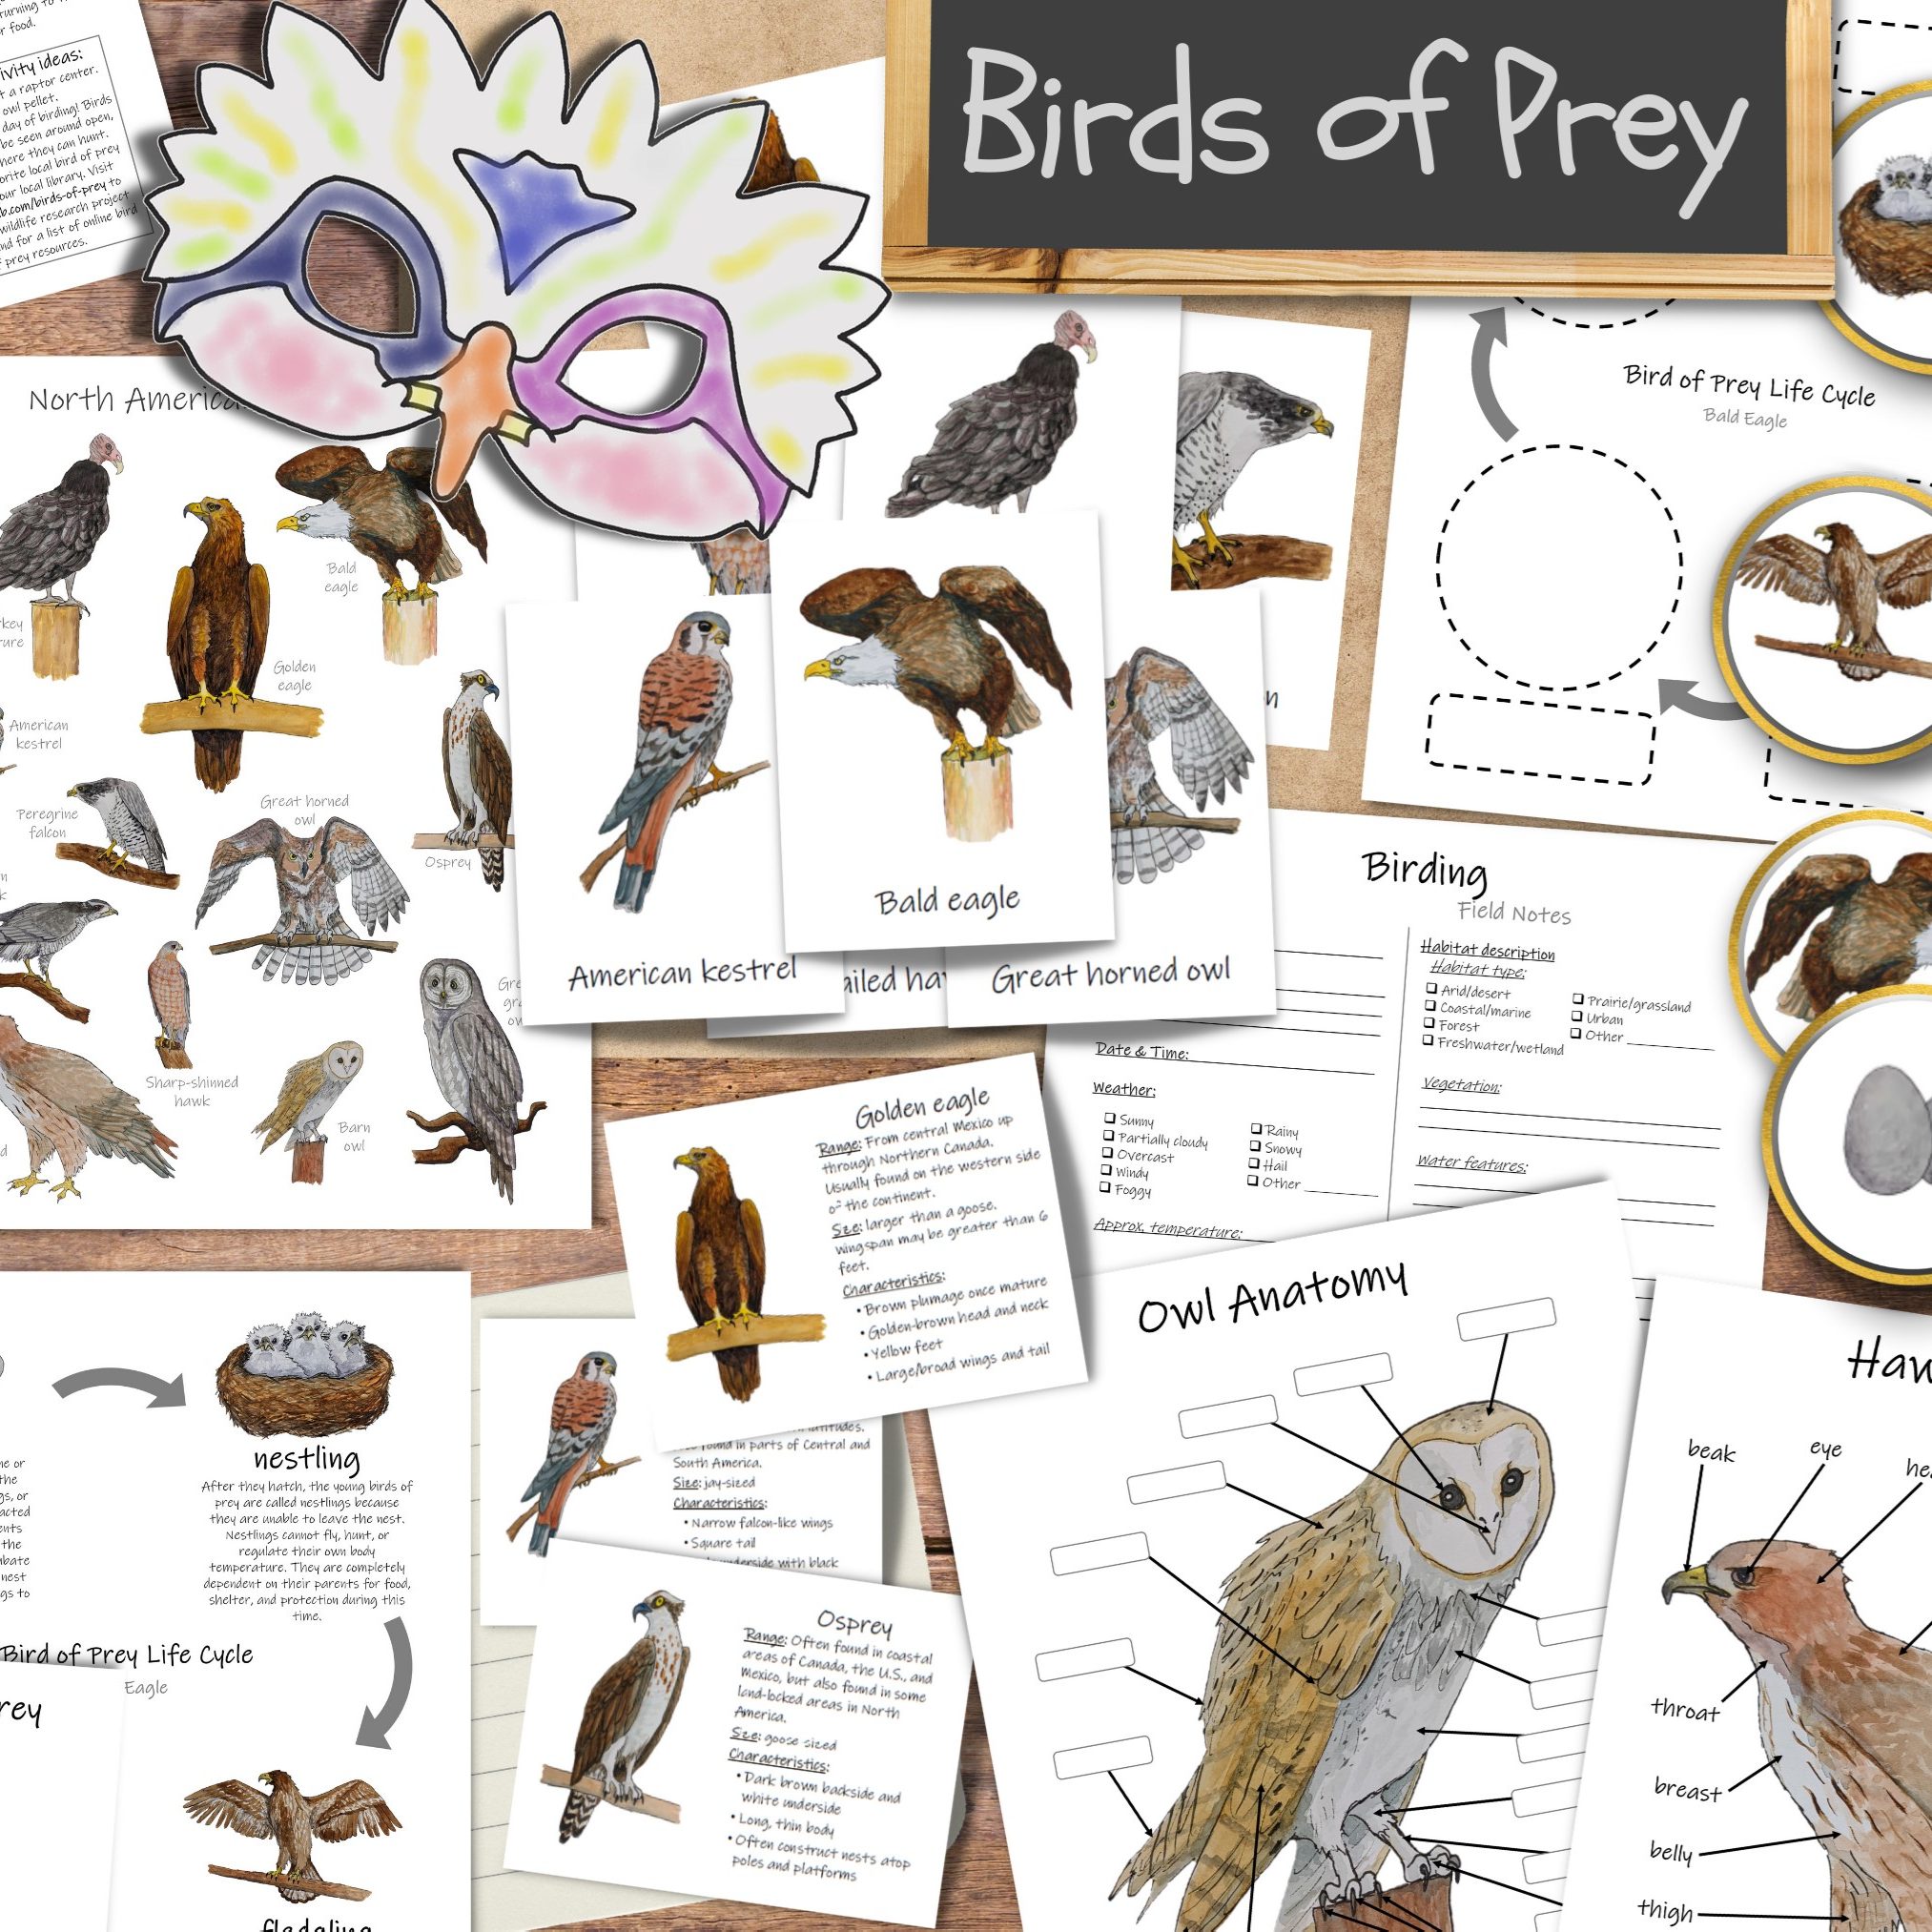 Birds of Prey of Mexico Poster